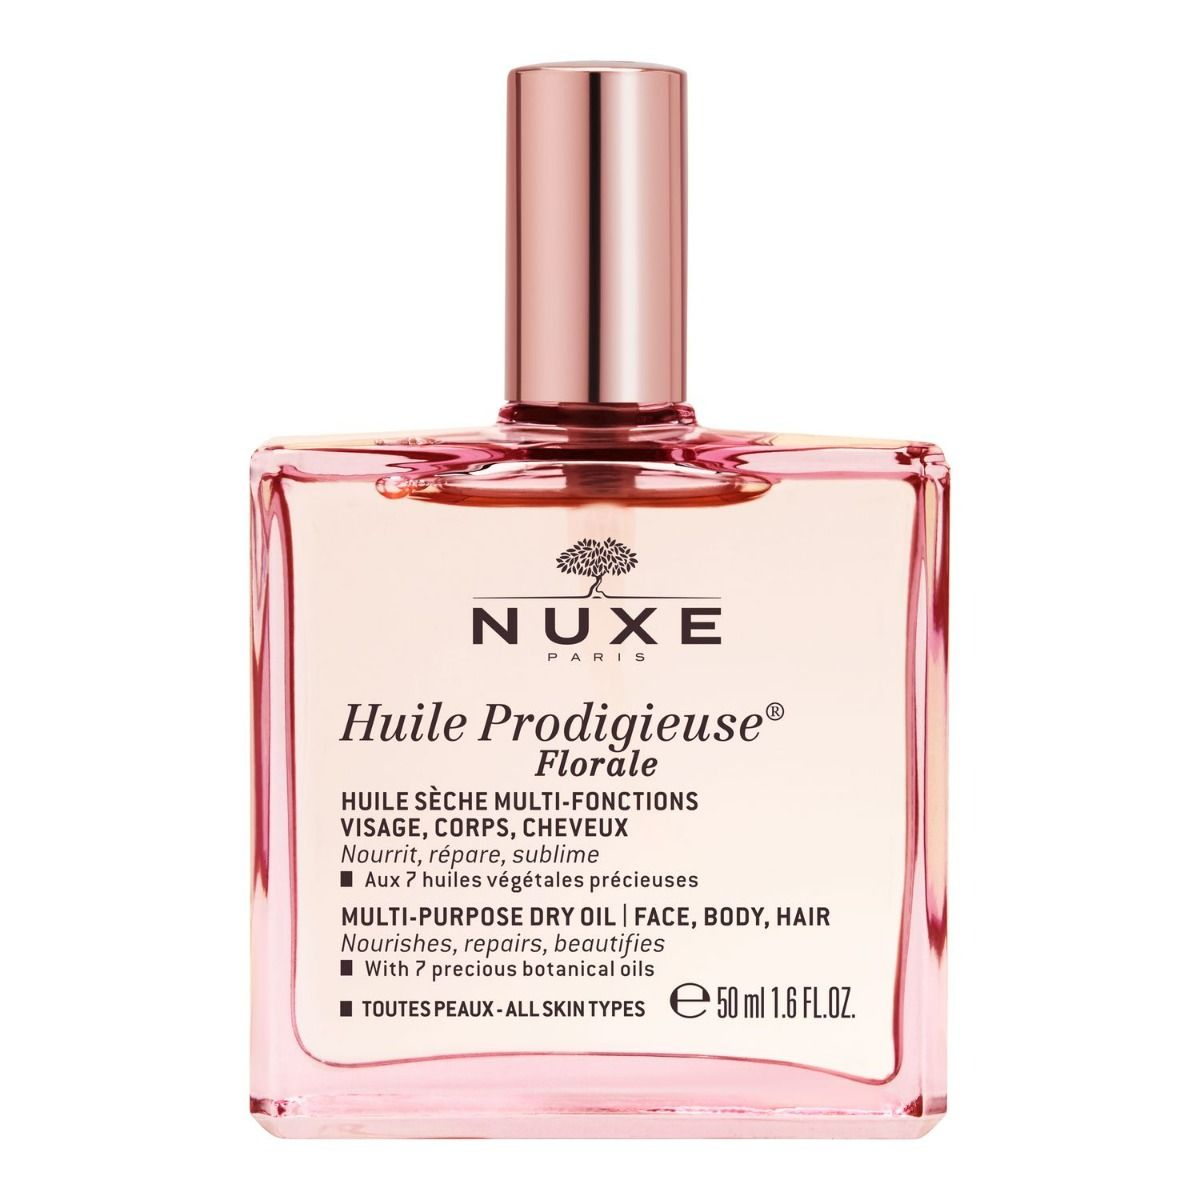 Nuxe Huile Prodigieuse Florale масло для лица, тела и волос, 50 ml gernetic huile de beuate beauty oil масло для лица и тела масло красоты 500 мл